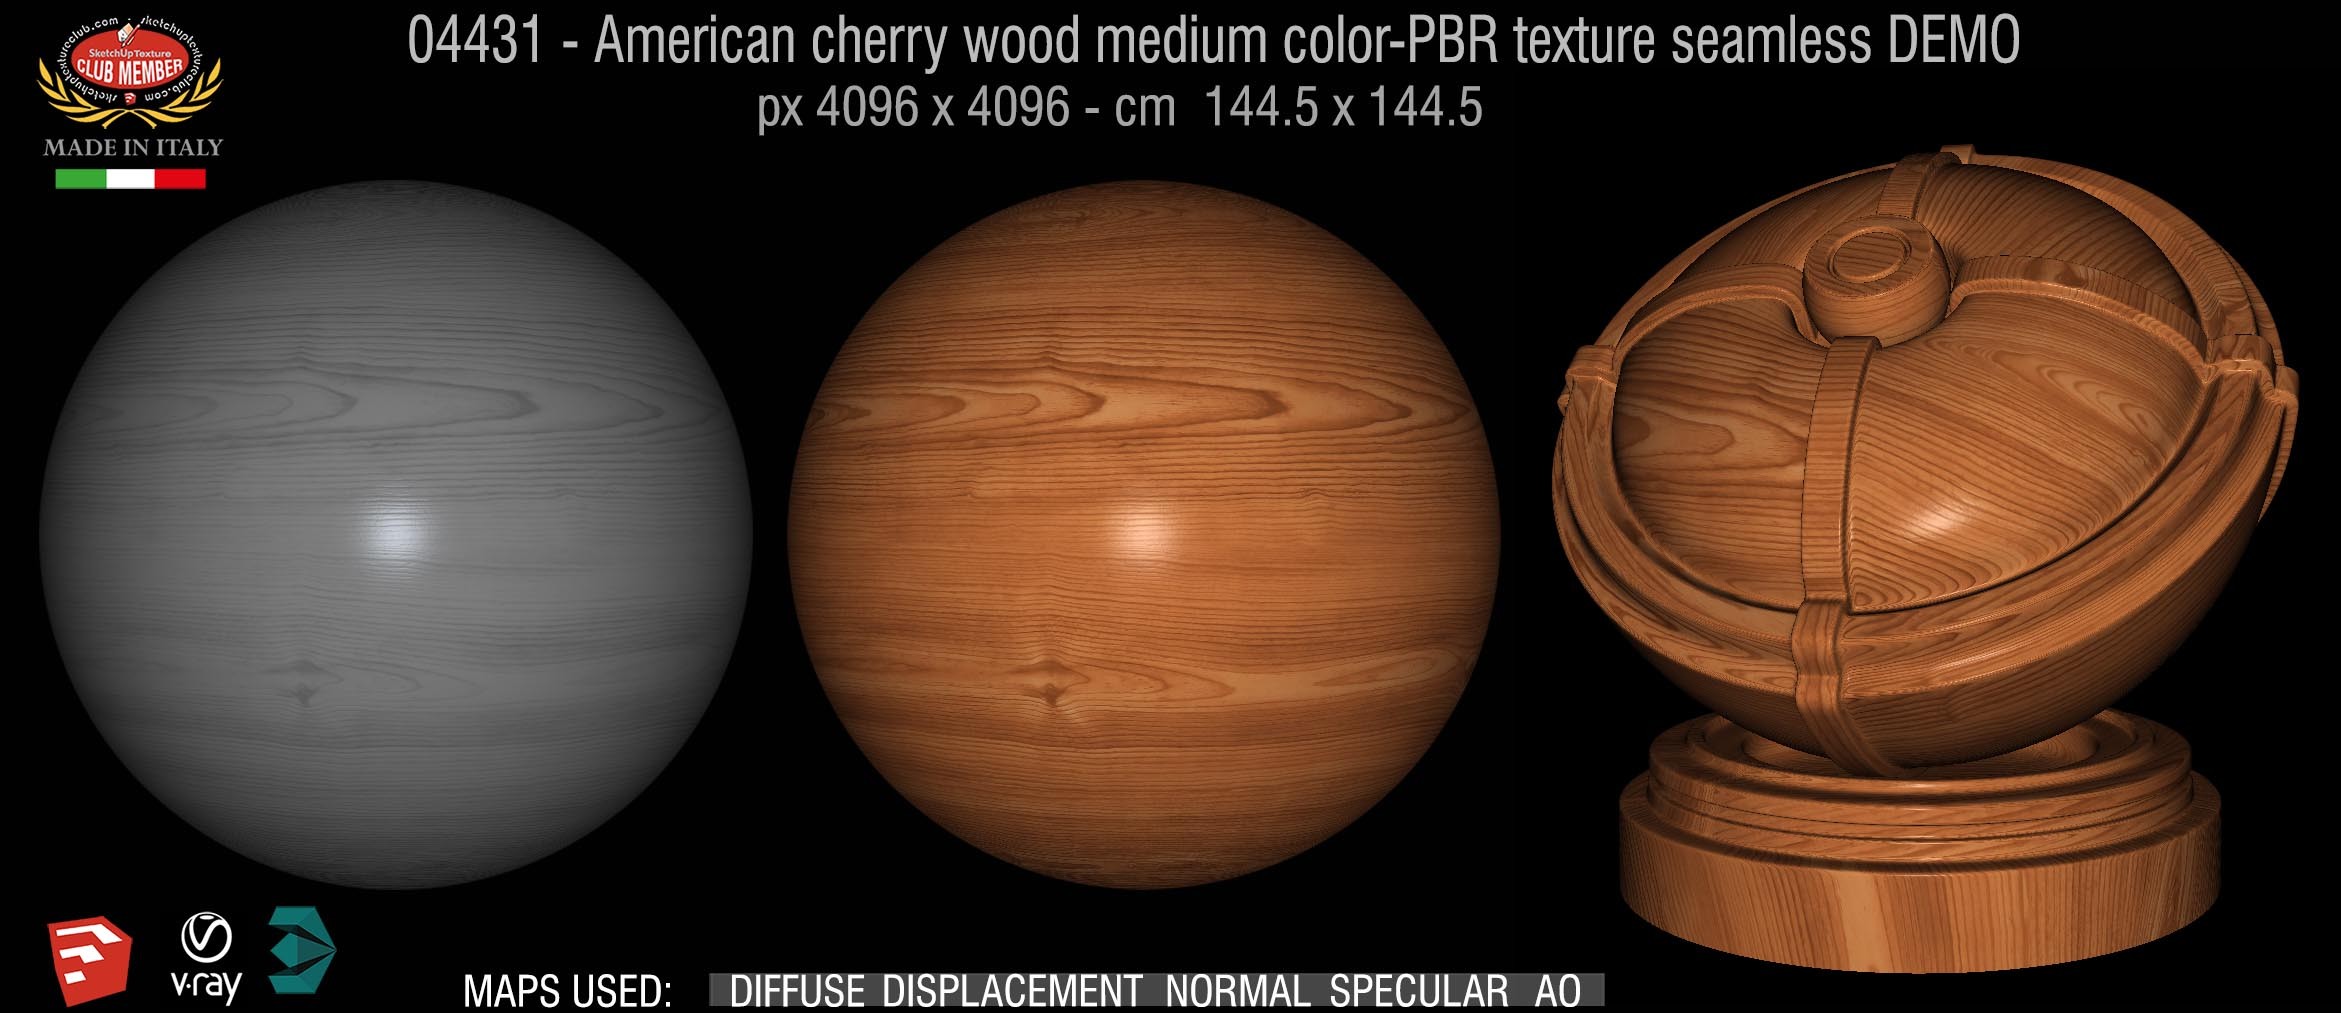 04431 American cherry wood medium color-PBR texture seamless DEMO